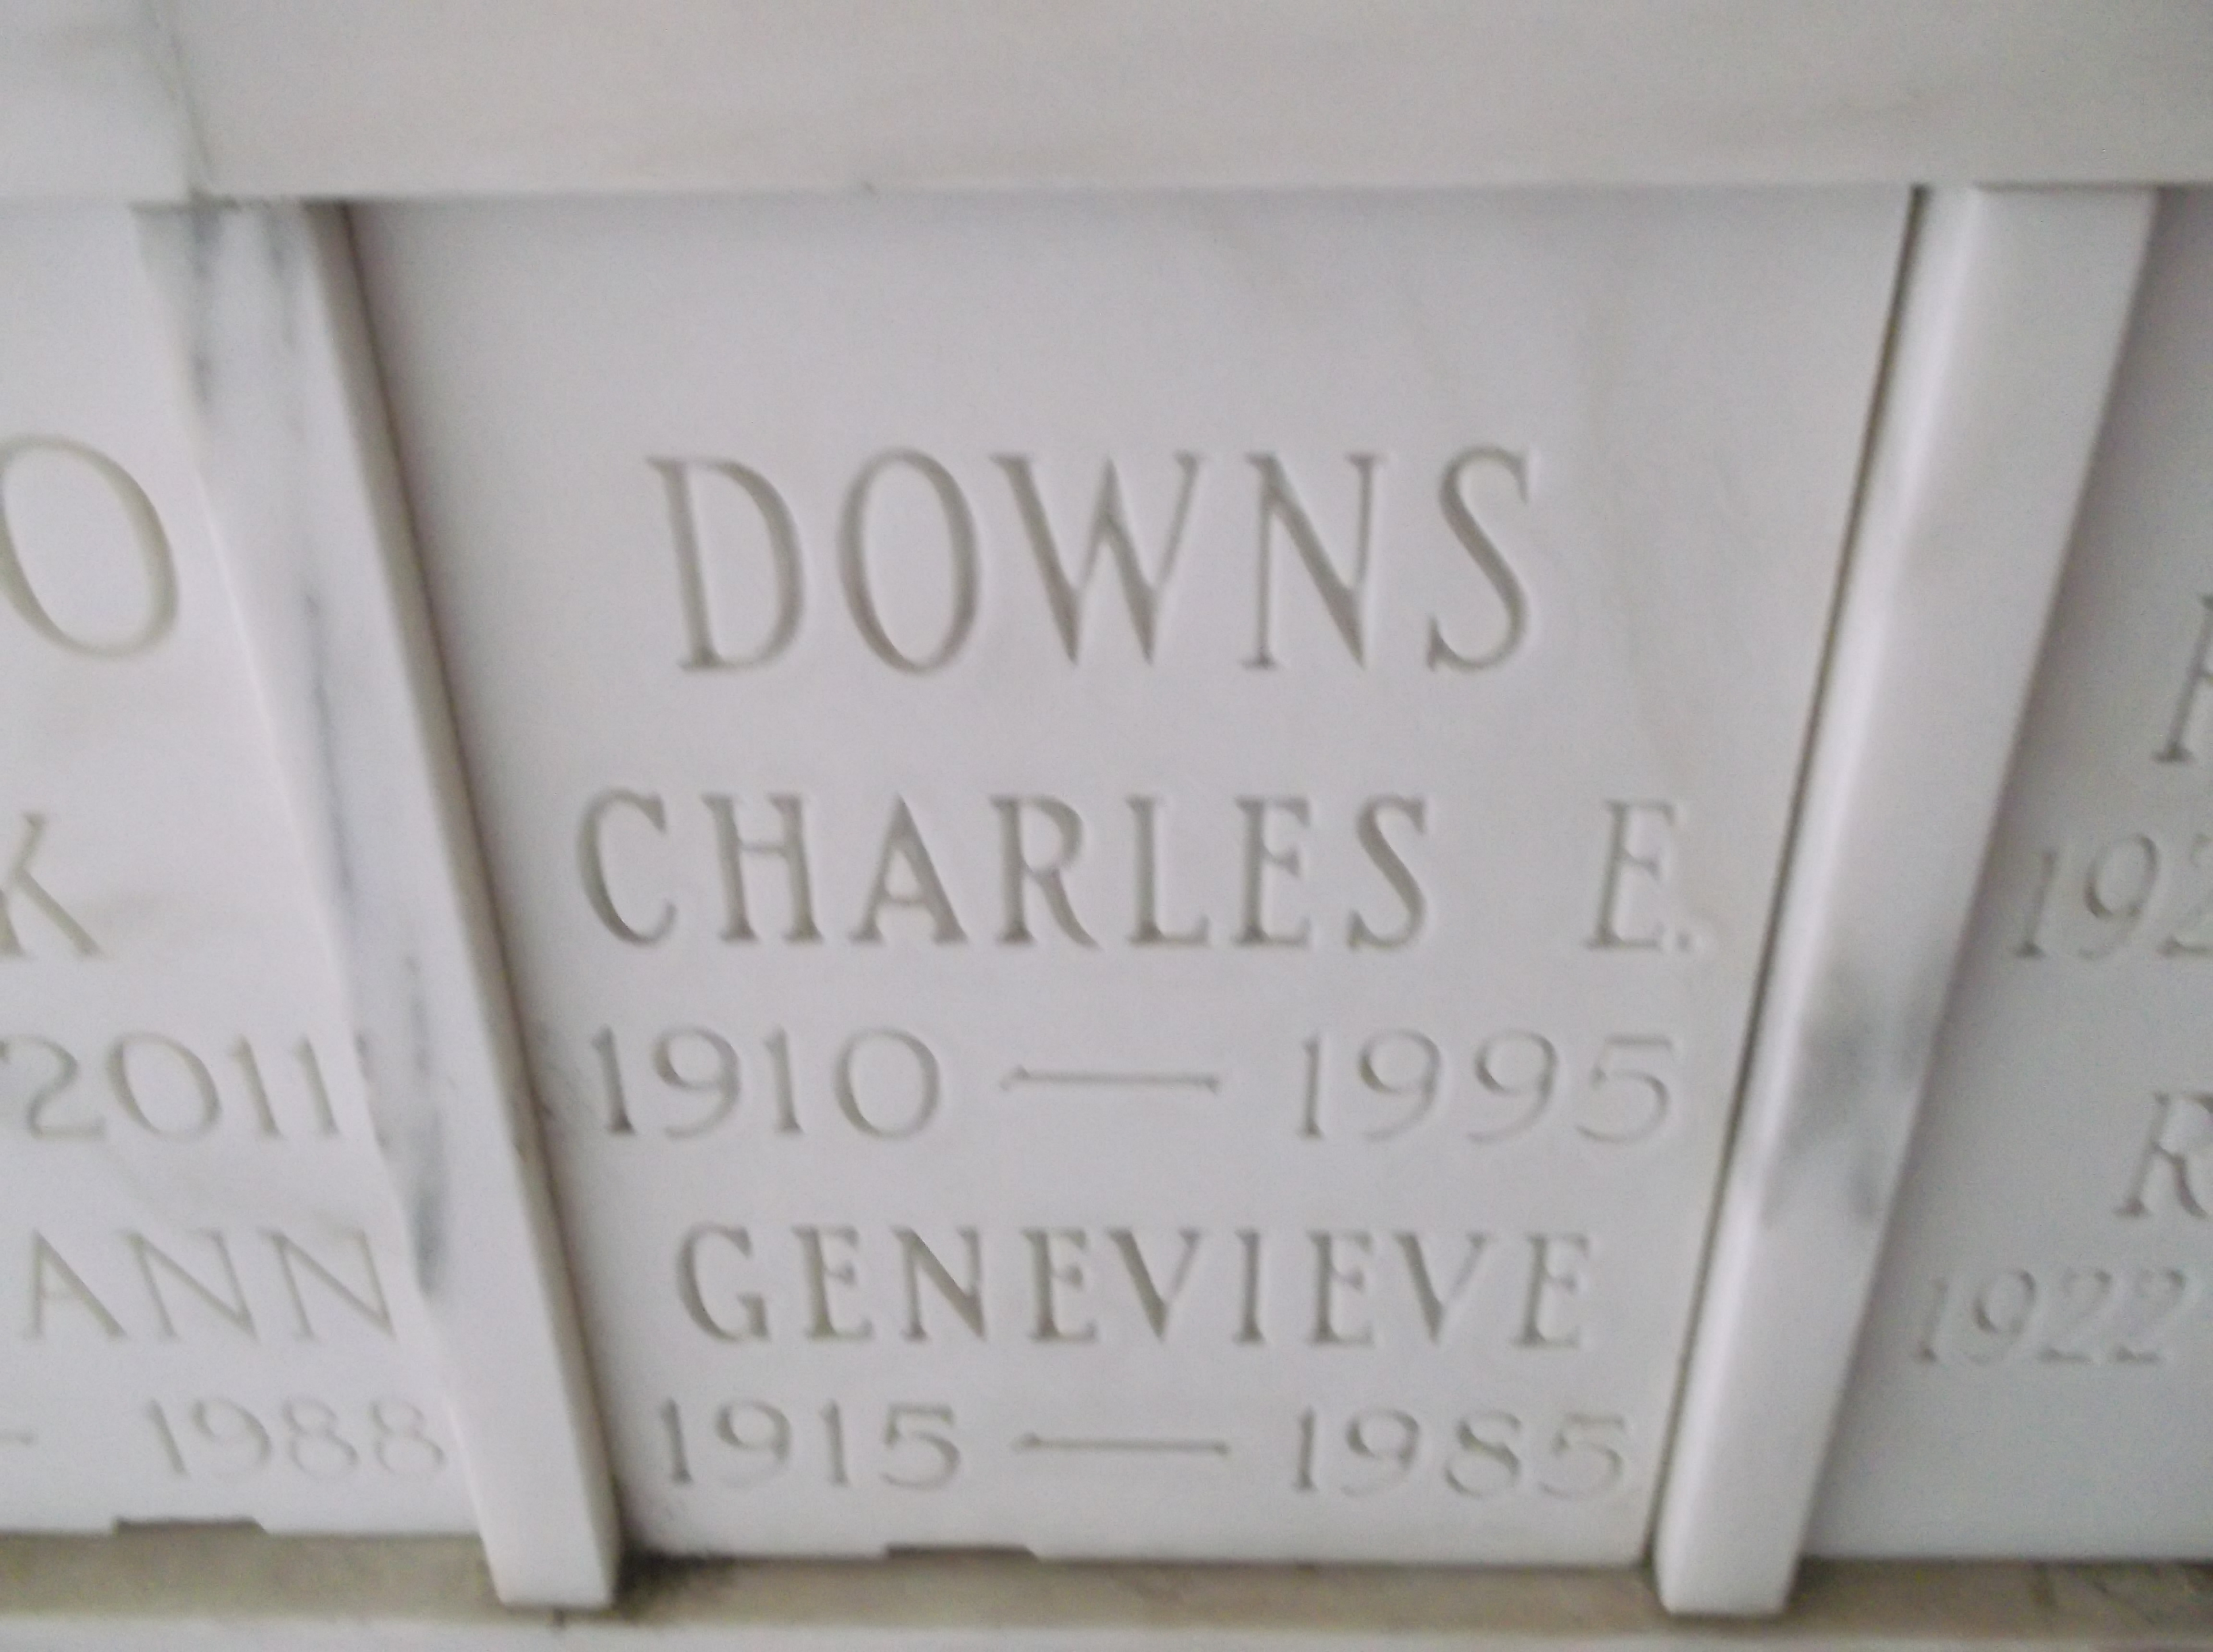 Charles E Downs